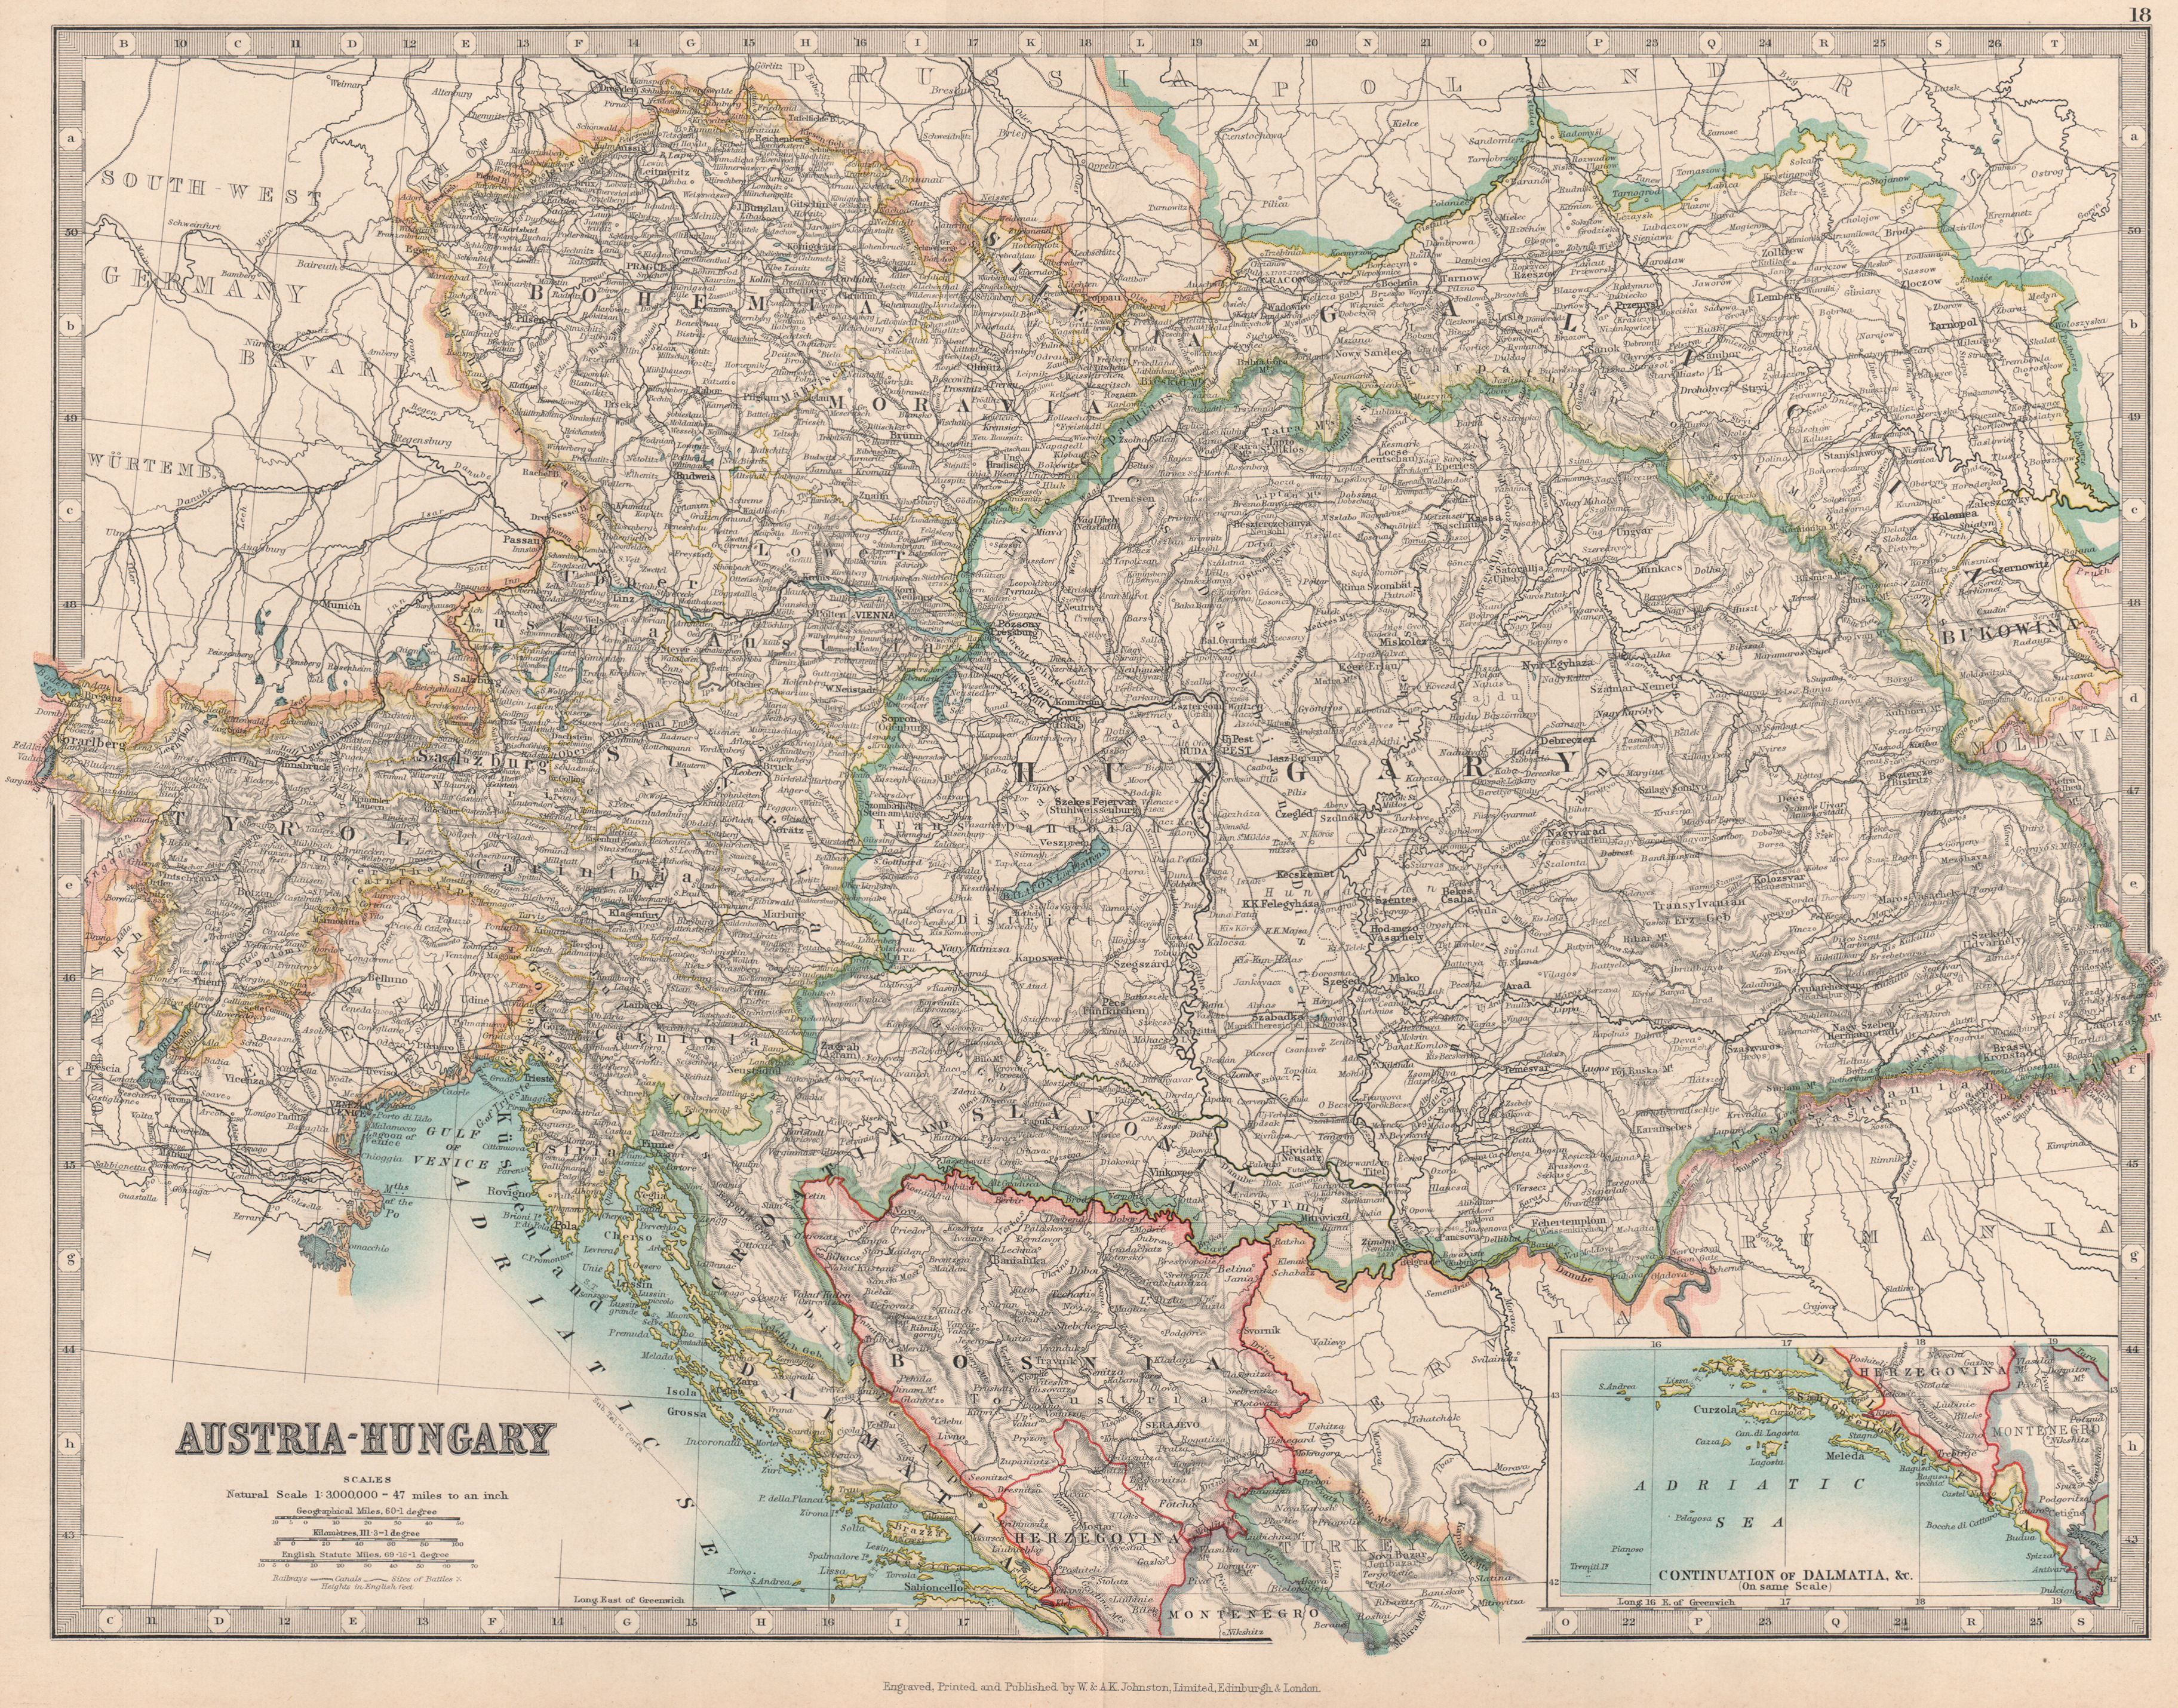 AUSTRIA-HUNGARY. Dalmatian coast. Bosnia. Railways. JOHNSTON 1912 old map